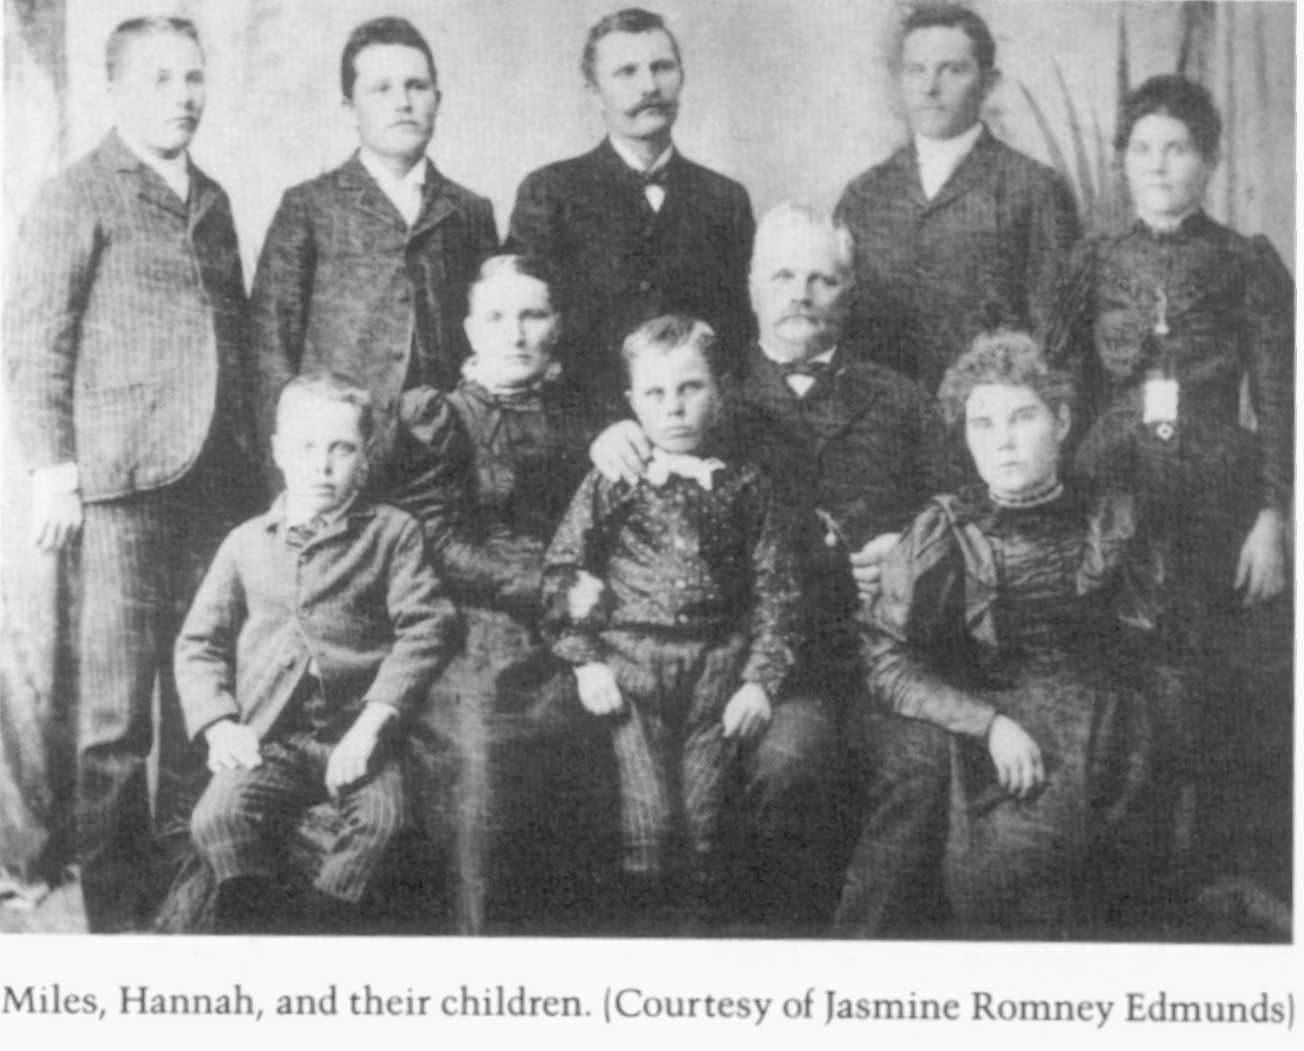 Hannah Hood Hill Romney and Miles Park Romney Family c. 1880 